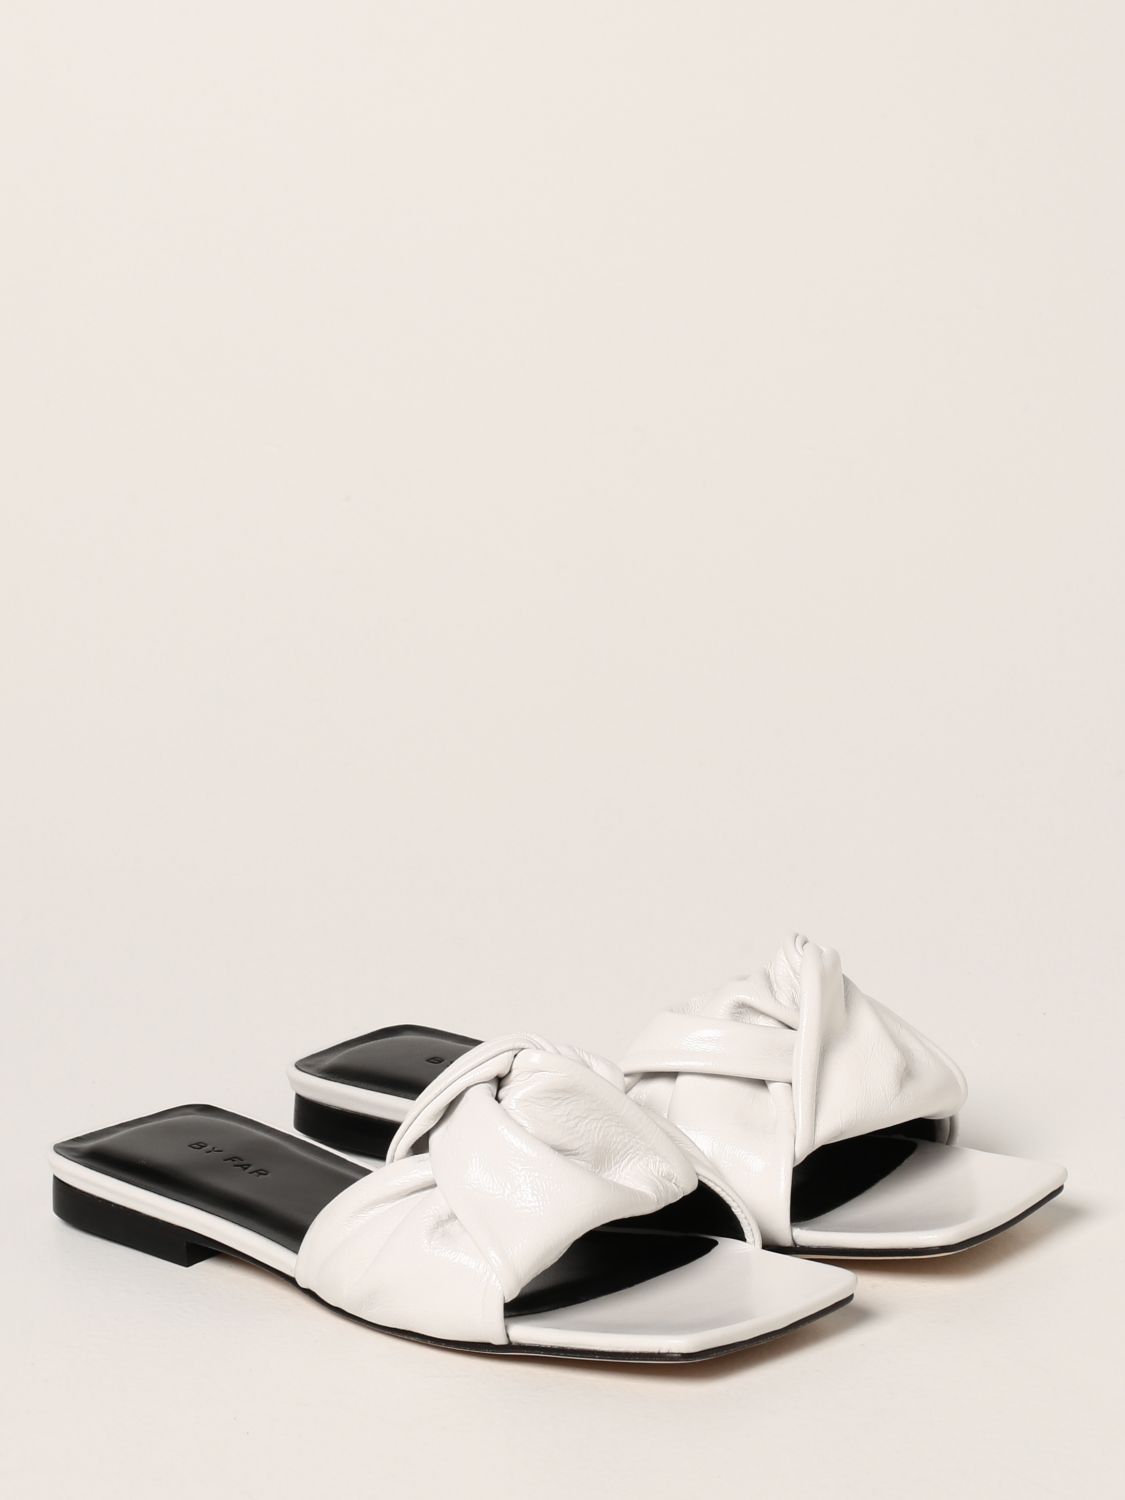 Sandalias planas By Far: Zapatos mujer By Far blanco 2